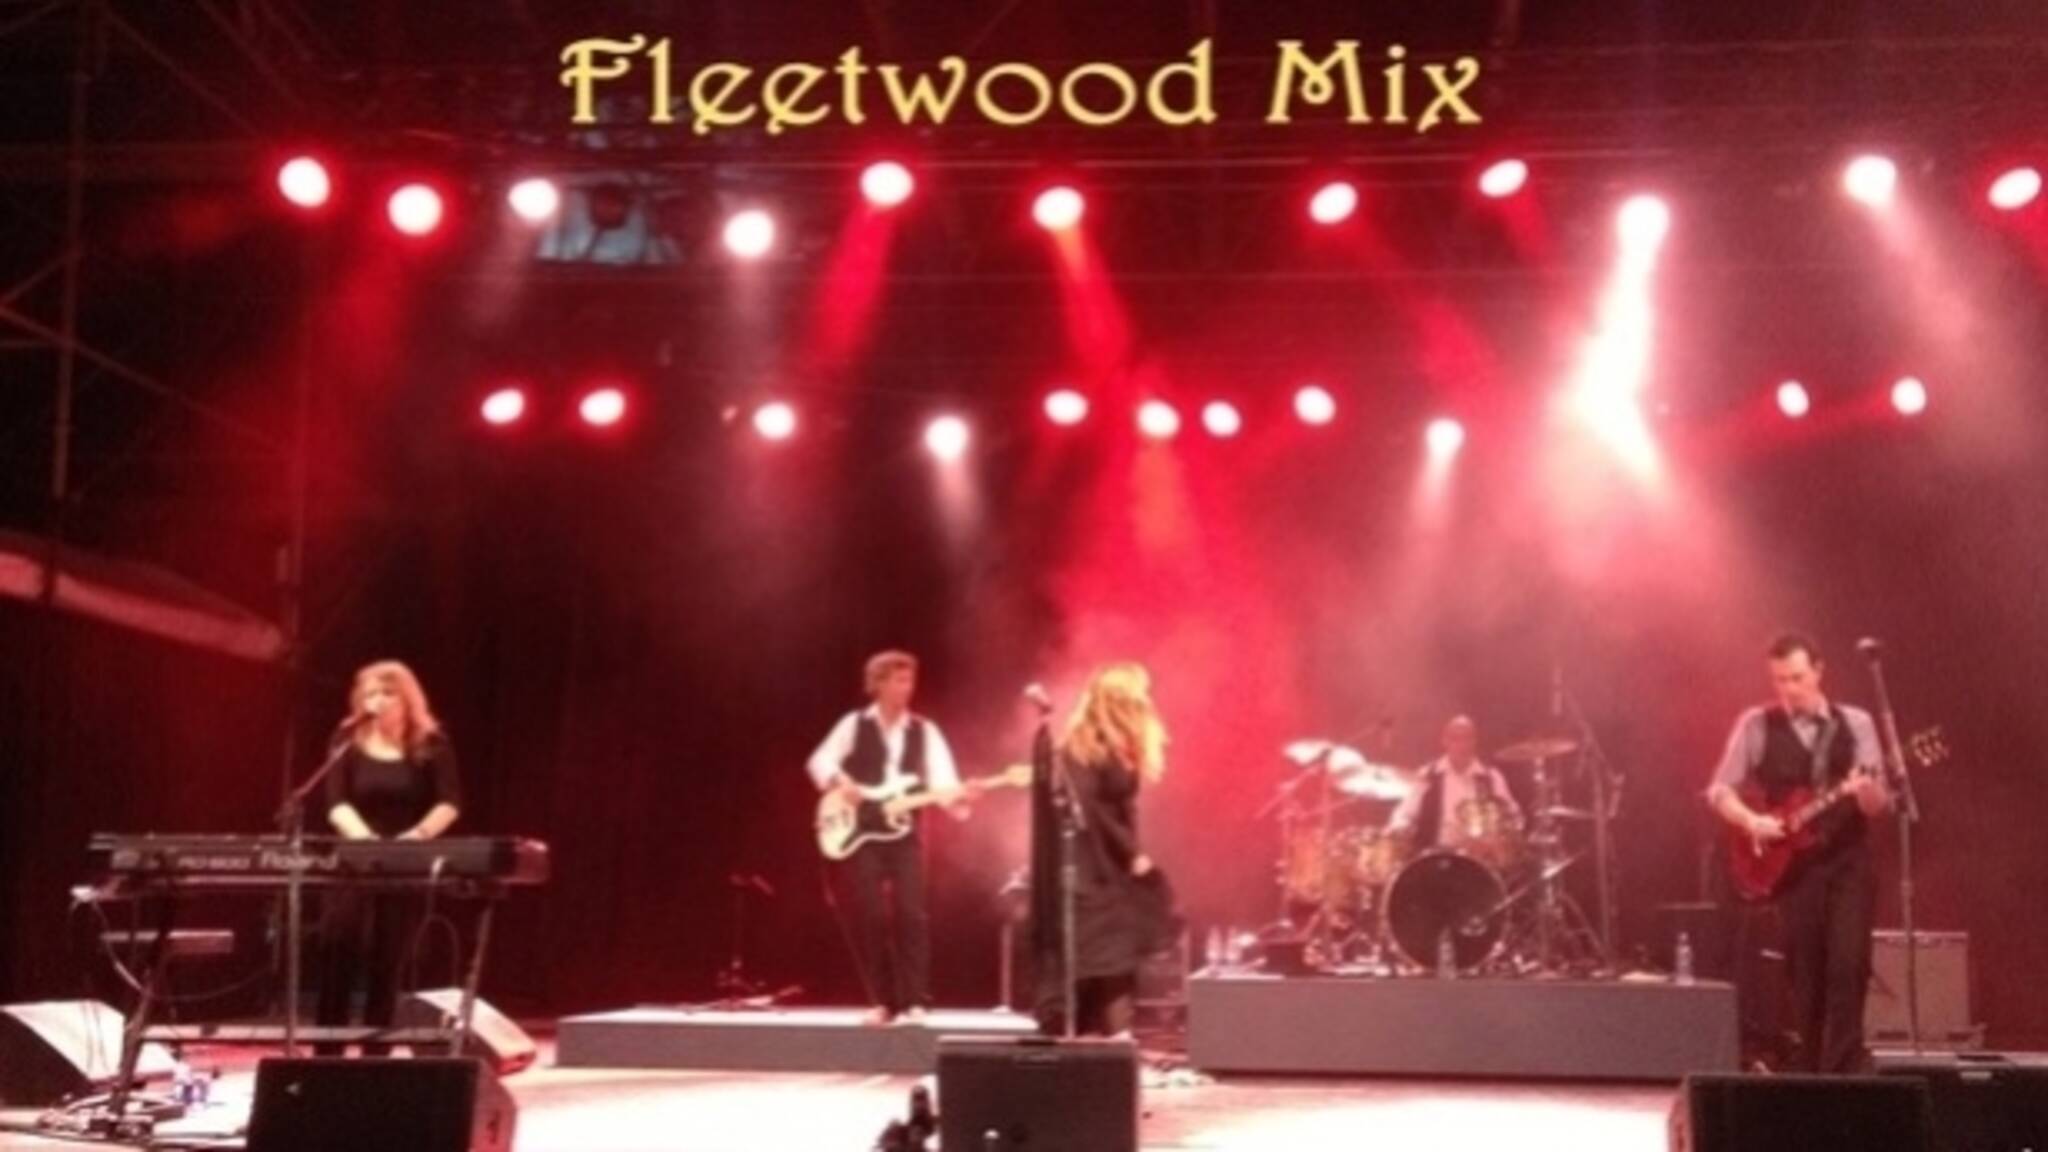 Fleetwood Mac Tribute Fleetwood Mix